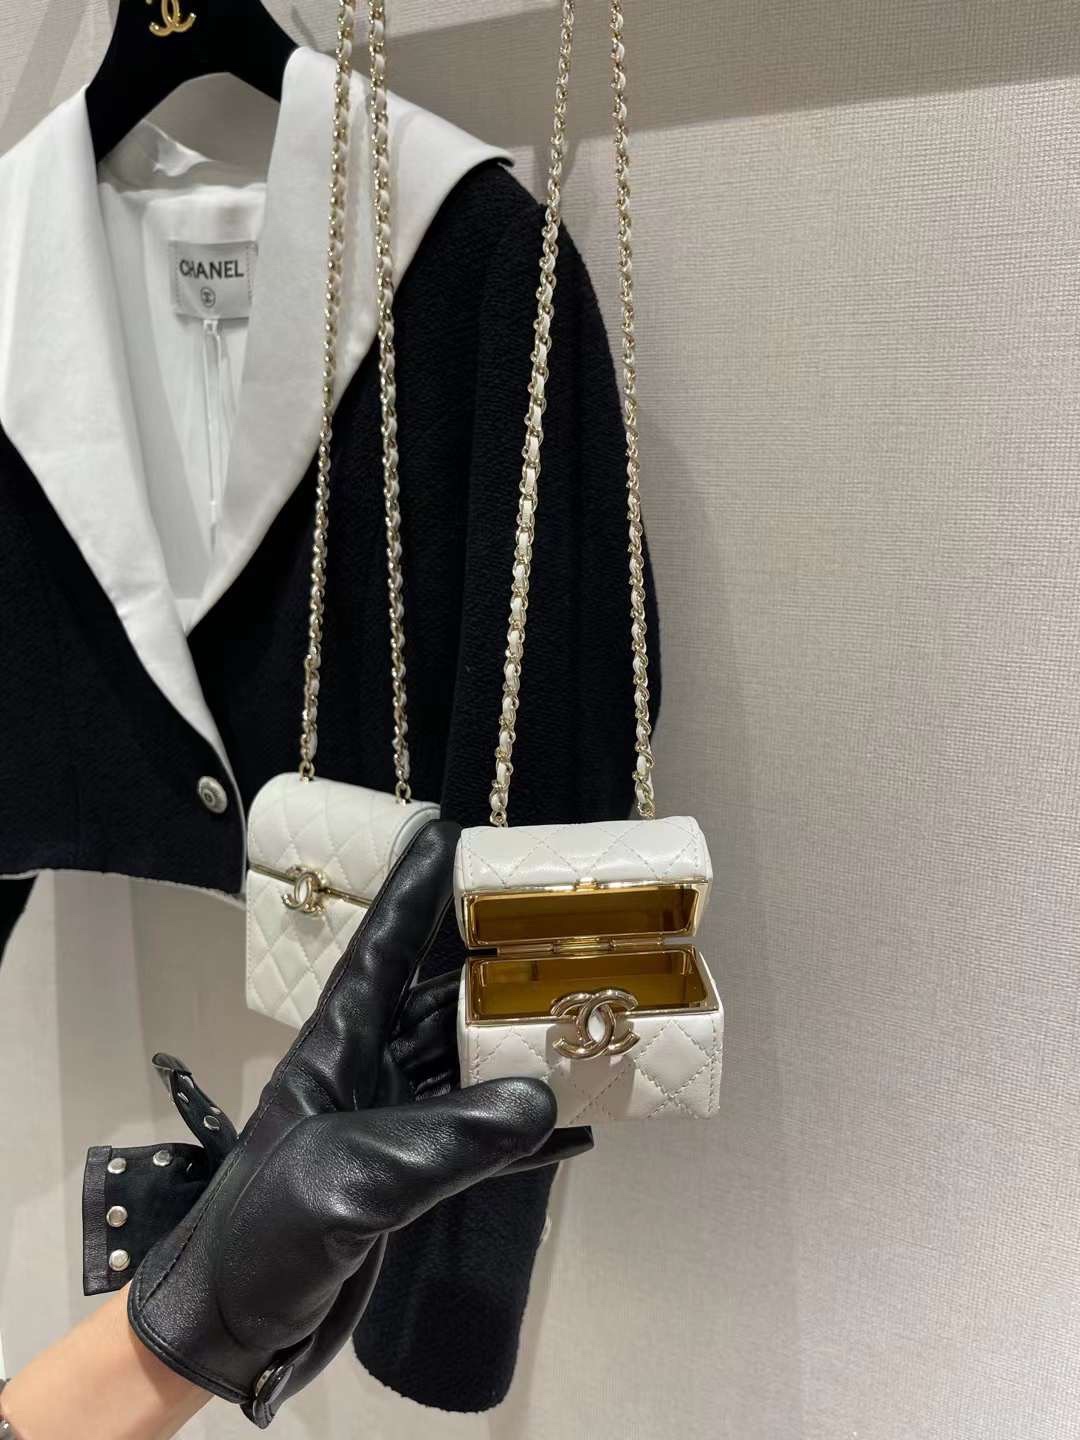 【P1170】Chanel新款包包 香奈儿进口羊皮春夏系列迷你盒子化妆包 白色